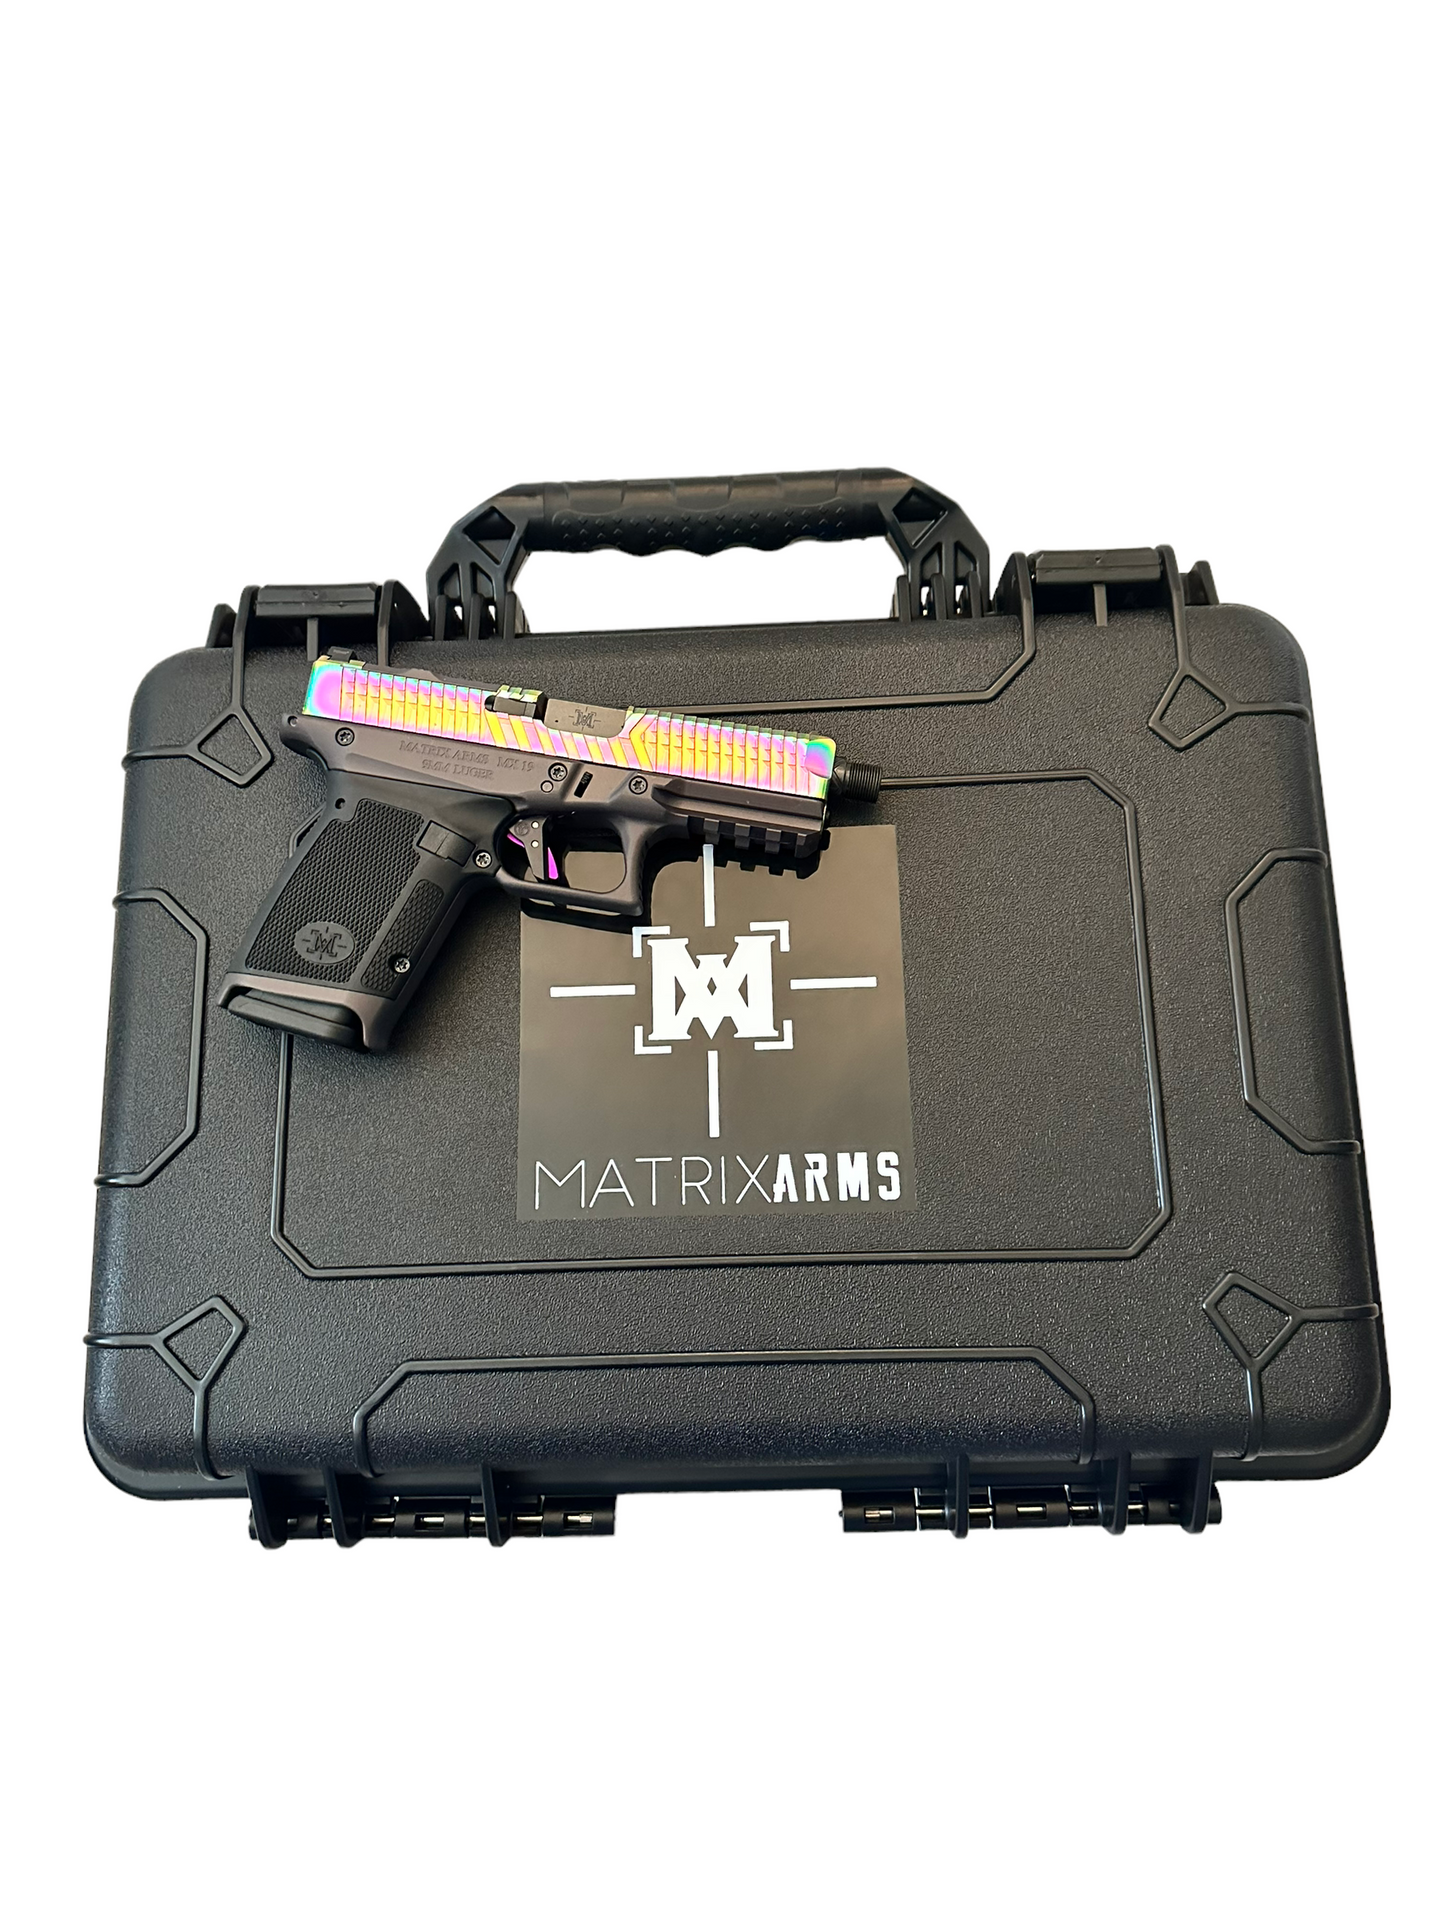 MATRIX ARMS MX19 PURPLE ENIGMA 9MM THREADED BARREL